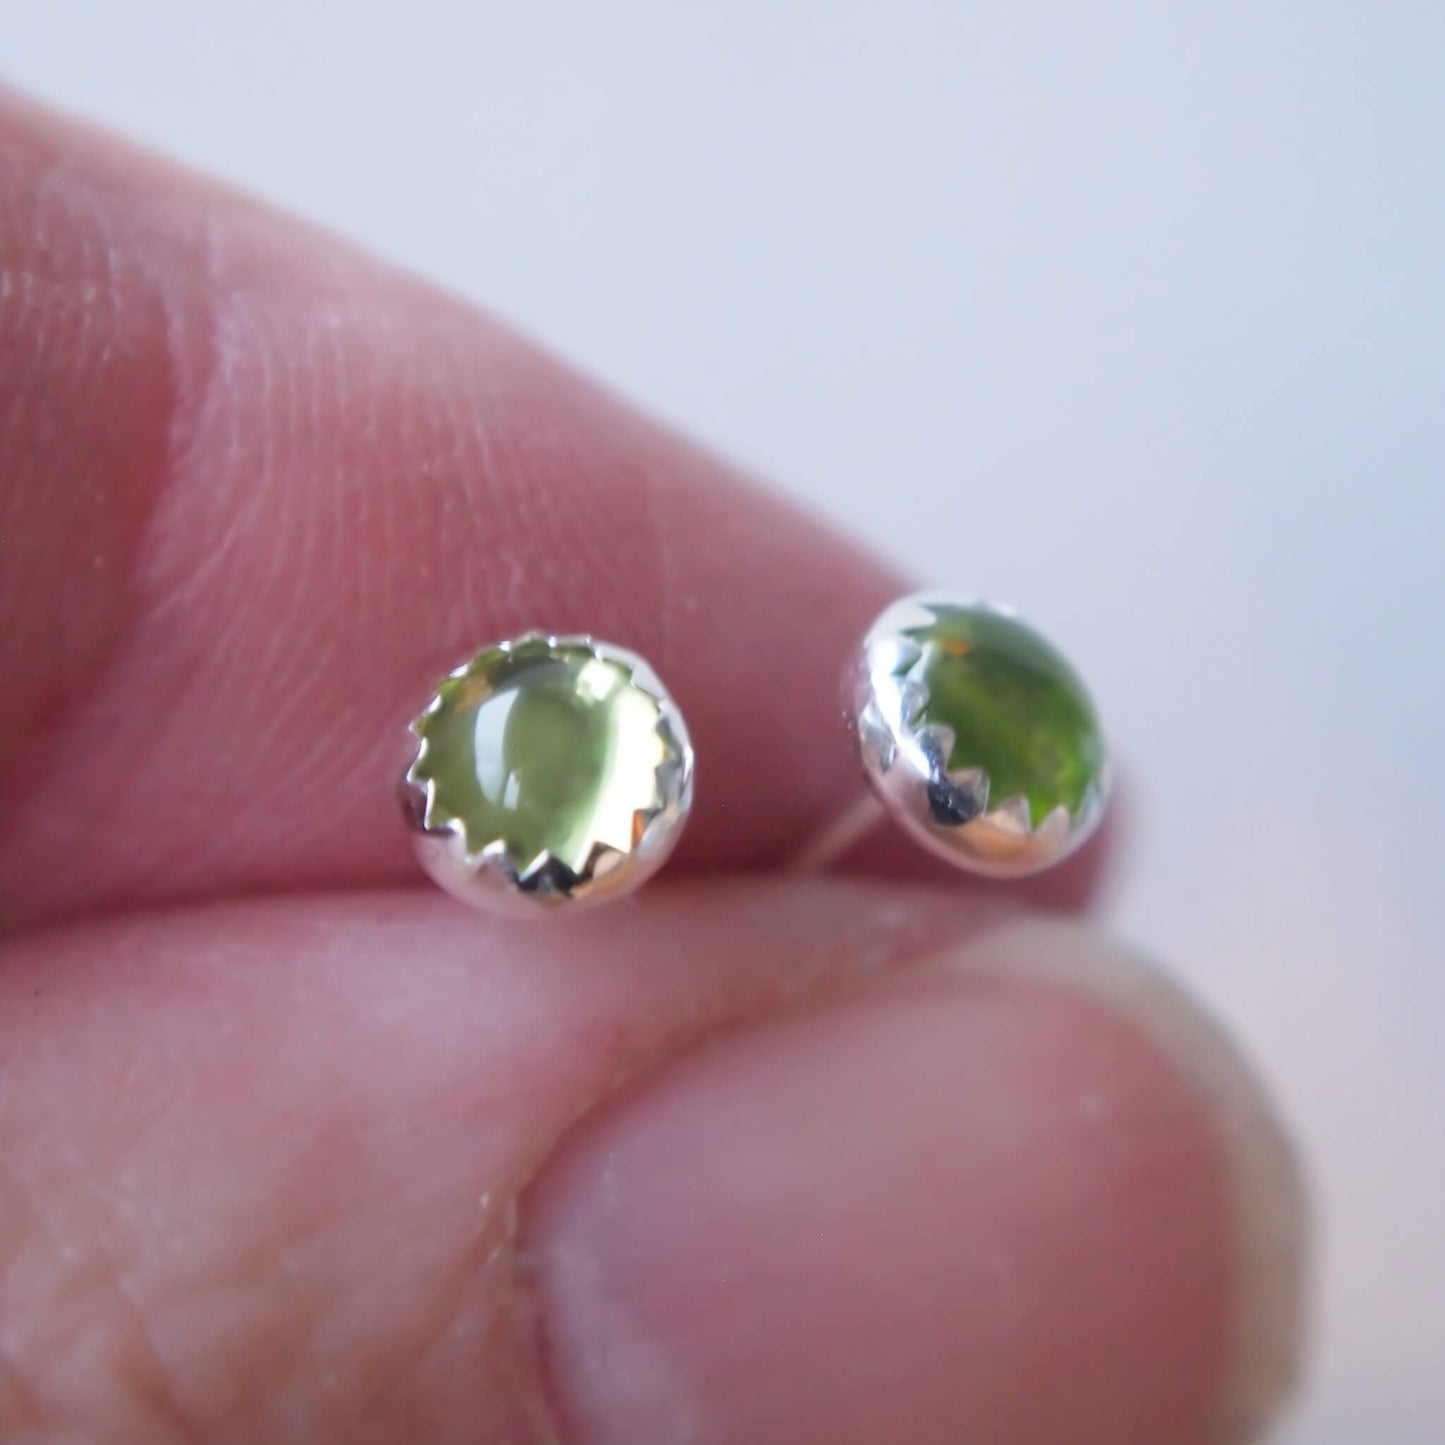 Peridot round gemstone studs with a peridot green cabochon gemstone in a simple silver setting. Handmade by maram jewellery in Scotland UK